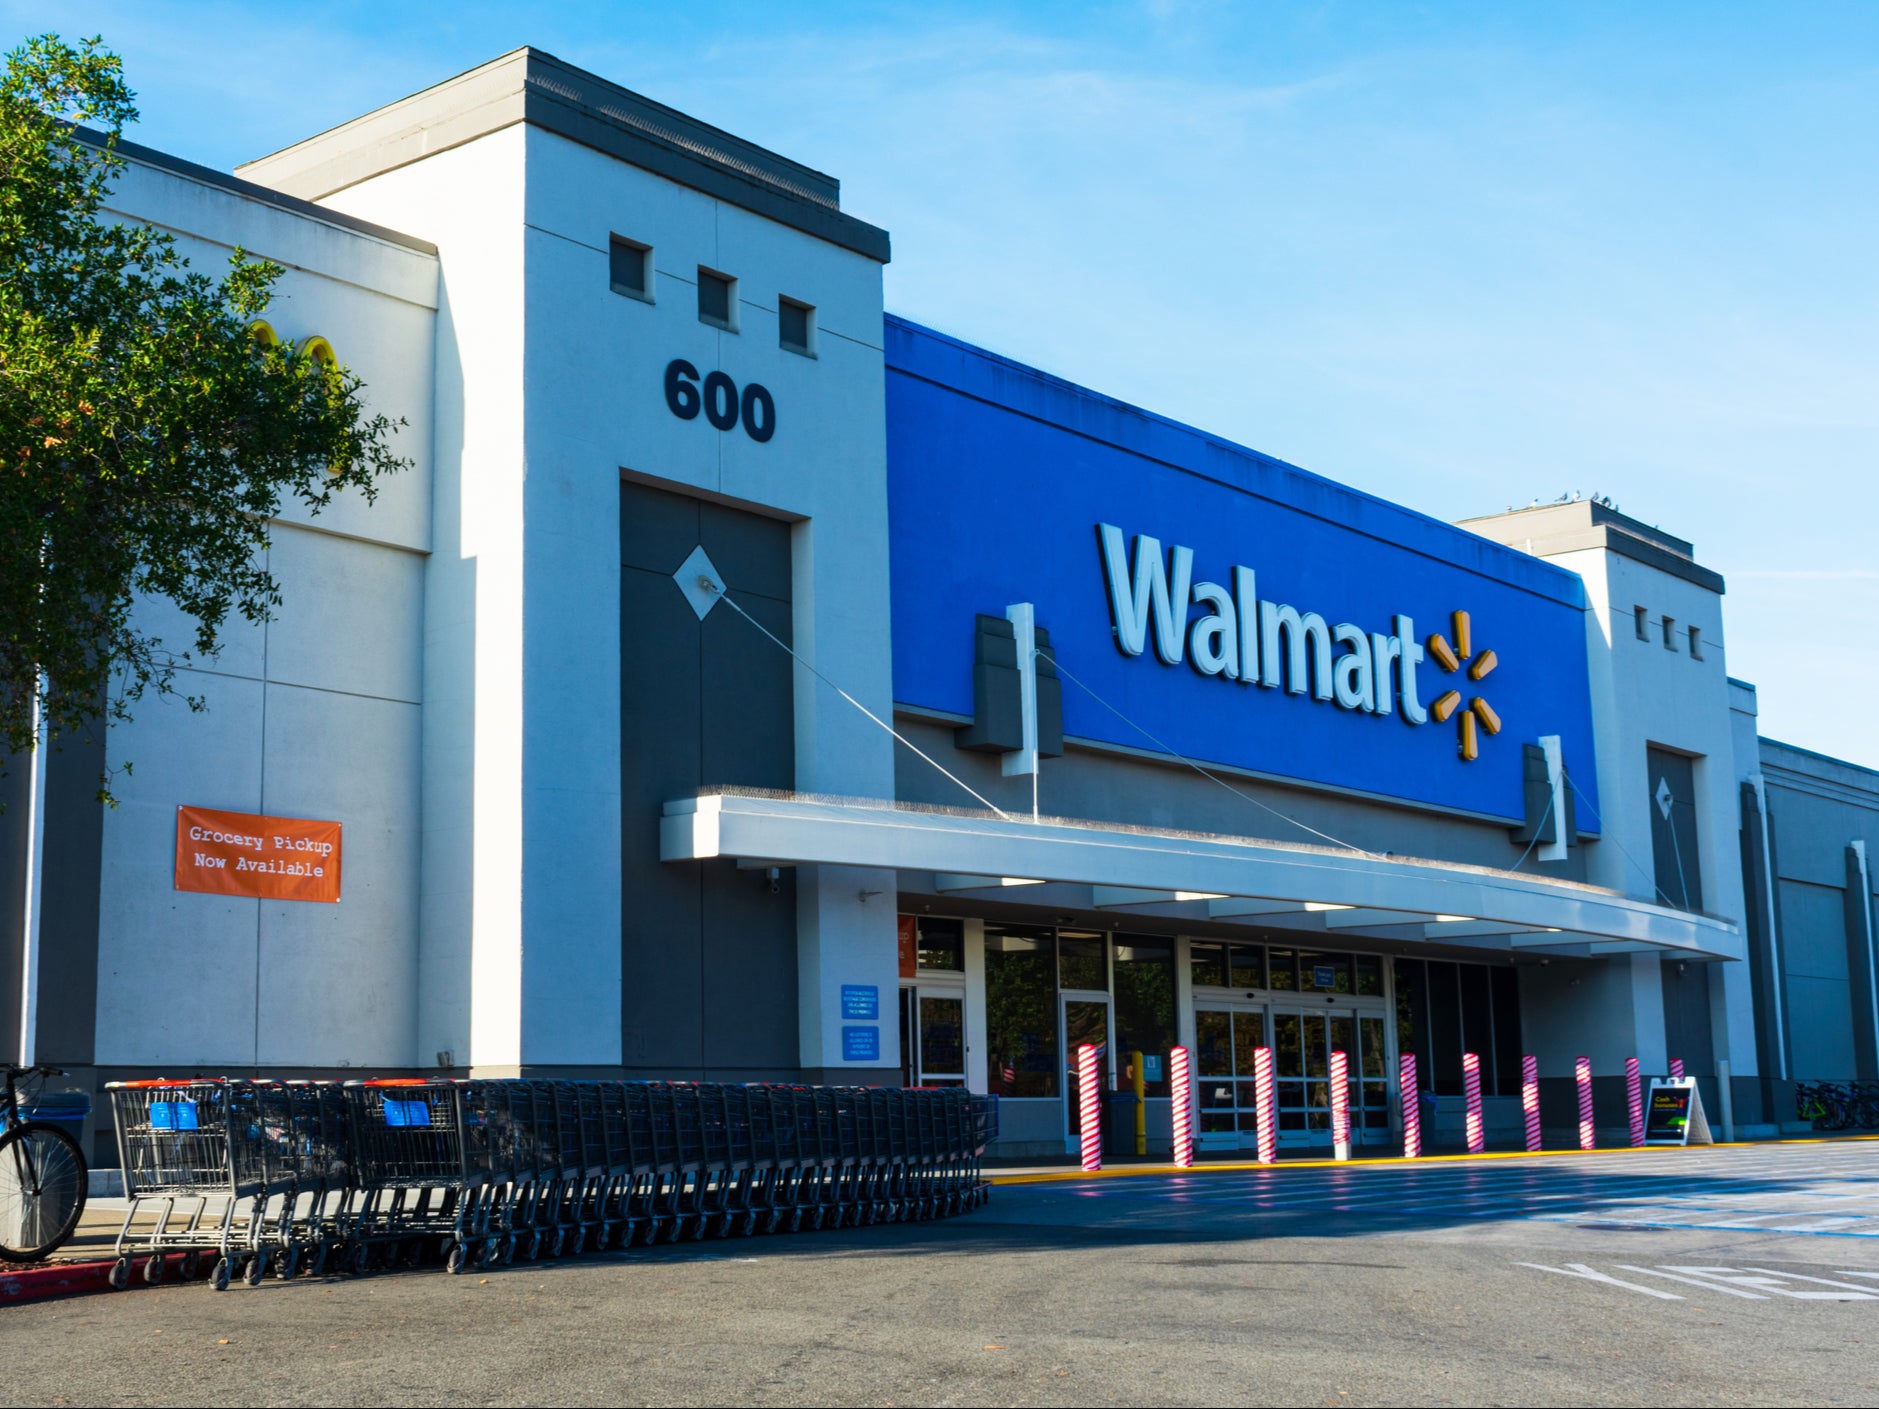 A Walmart store in California, US